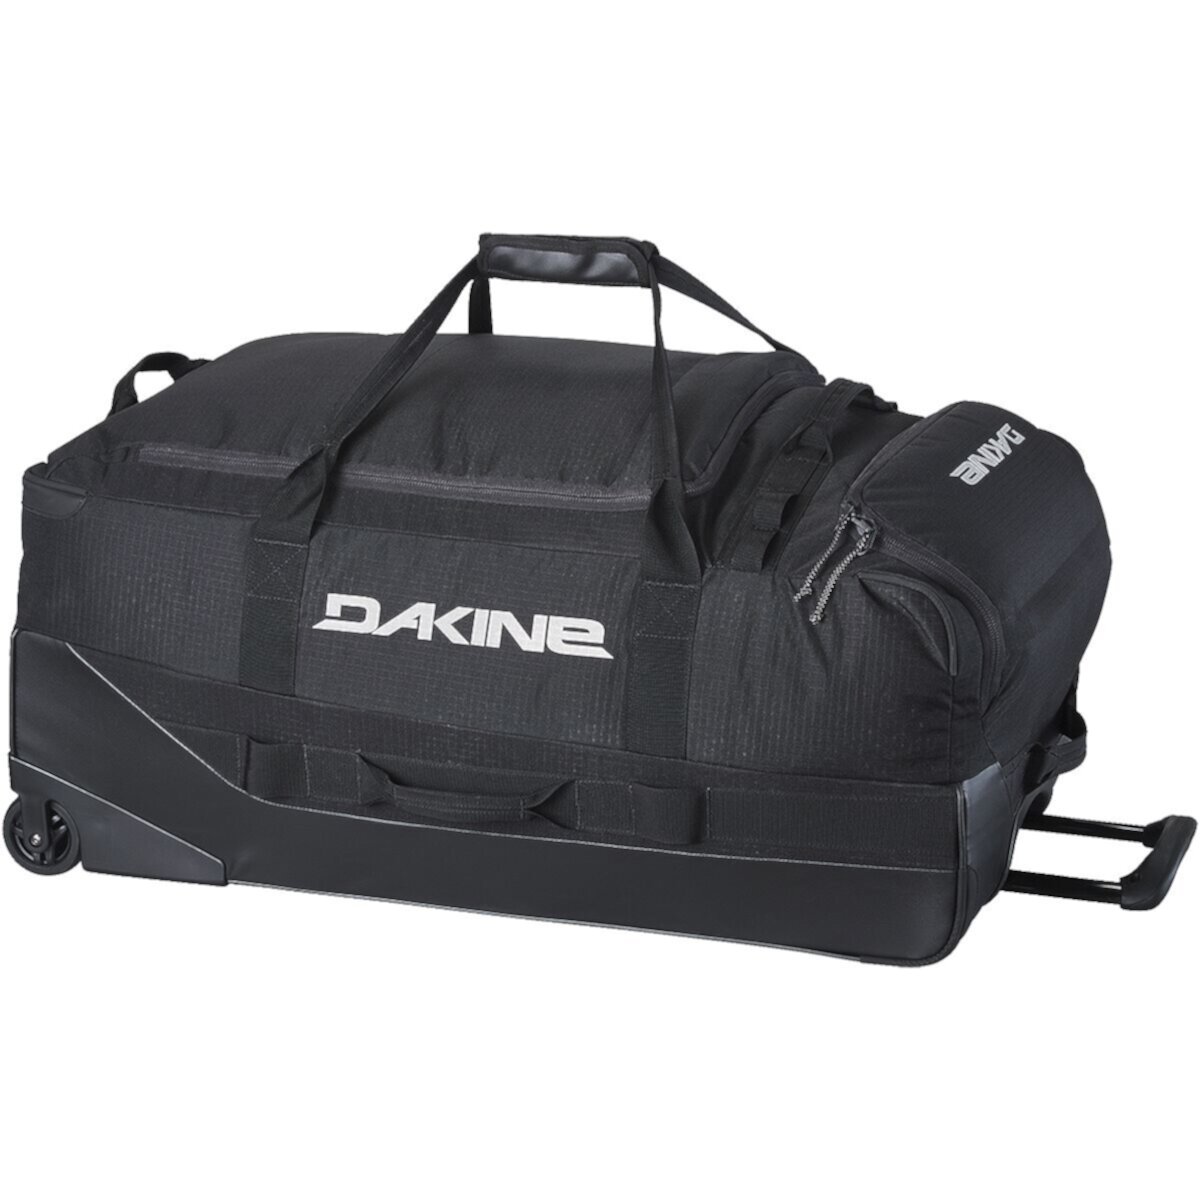 Спортивная сумка Torque 125L на колесиках Dakine